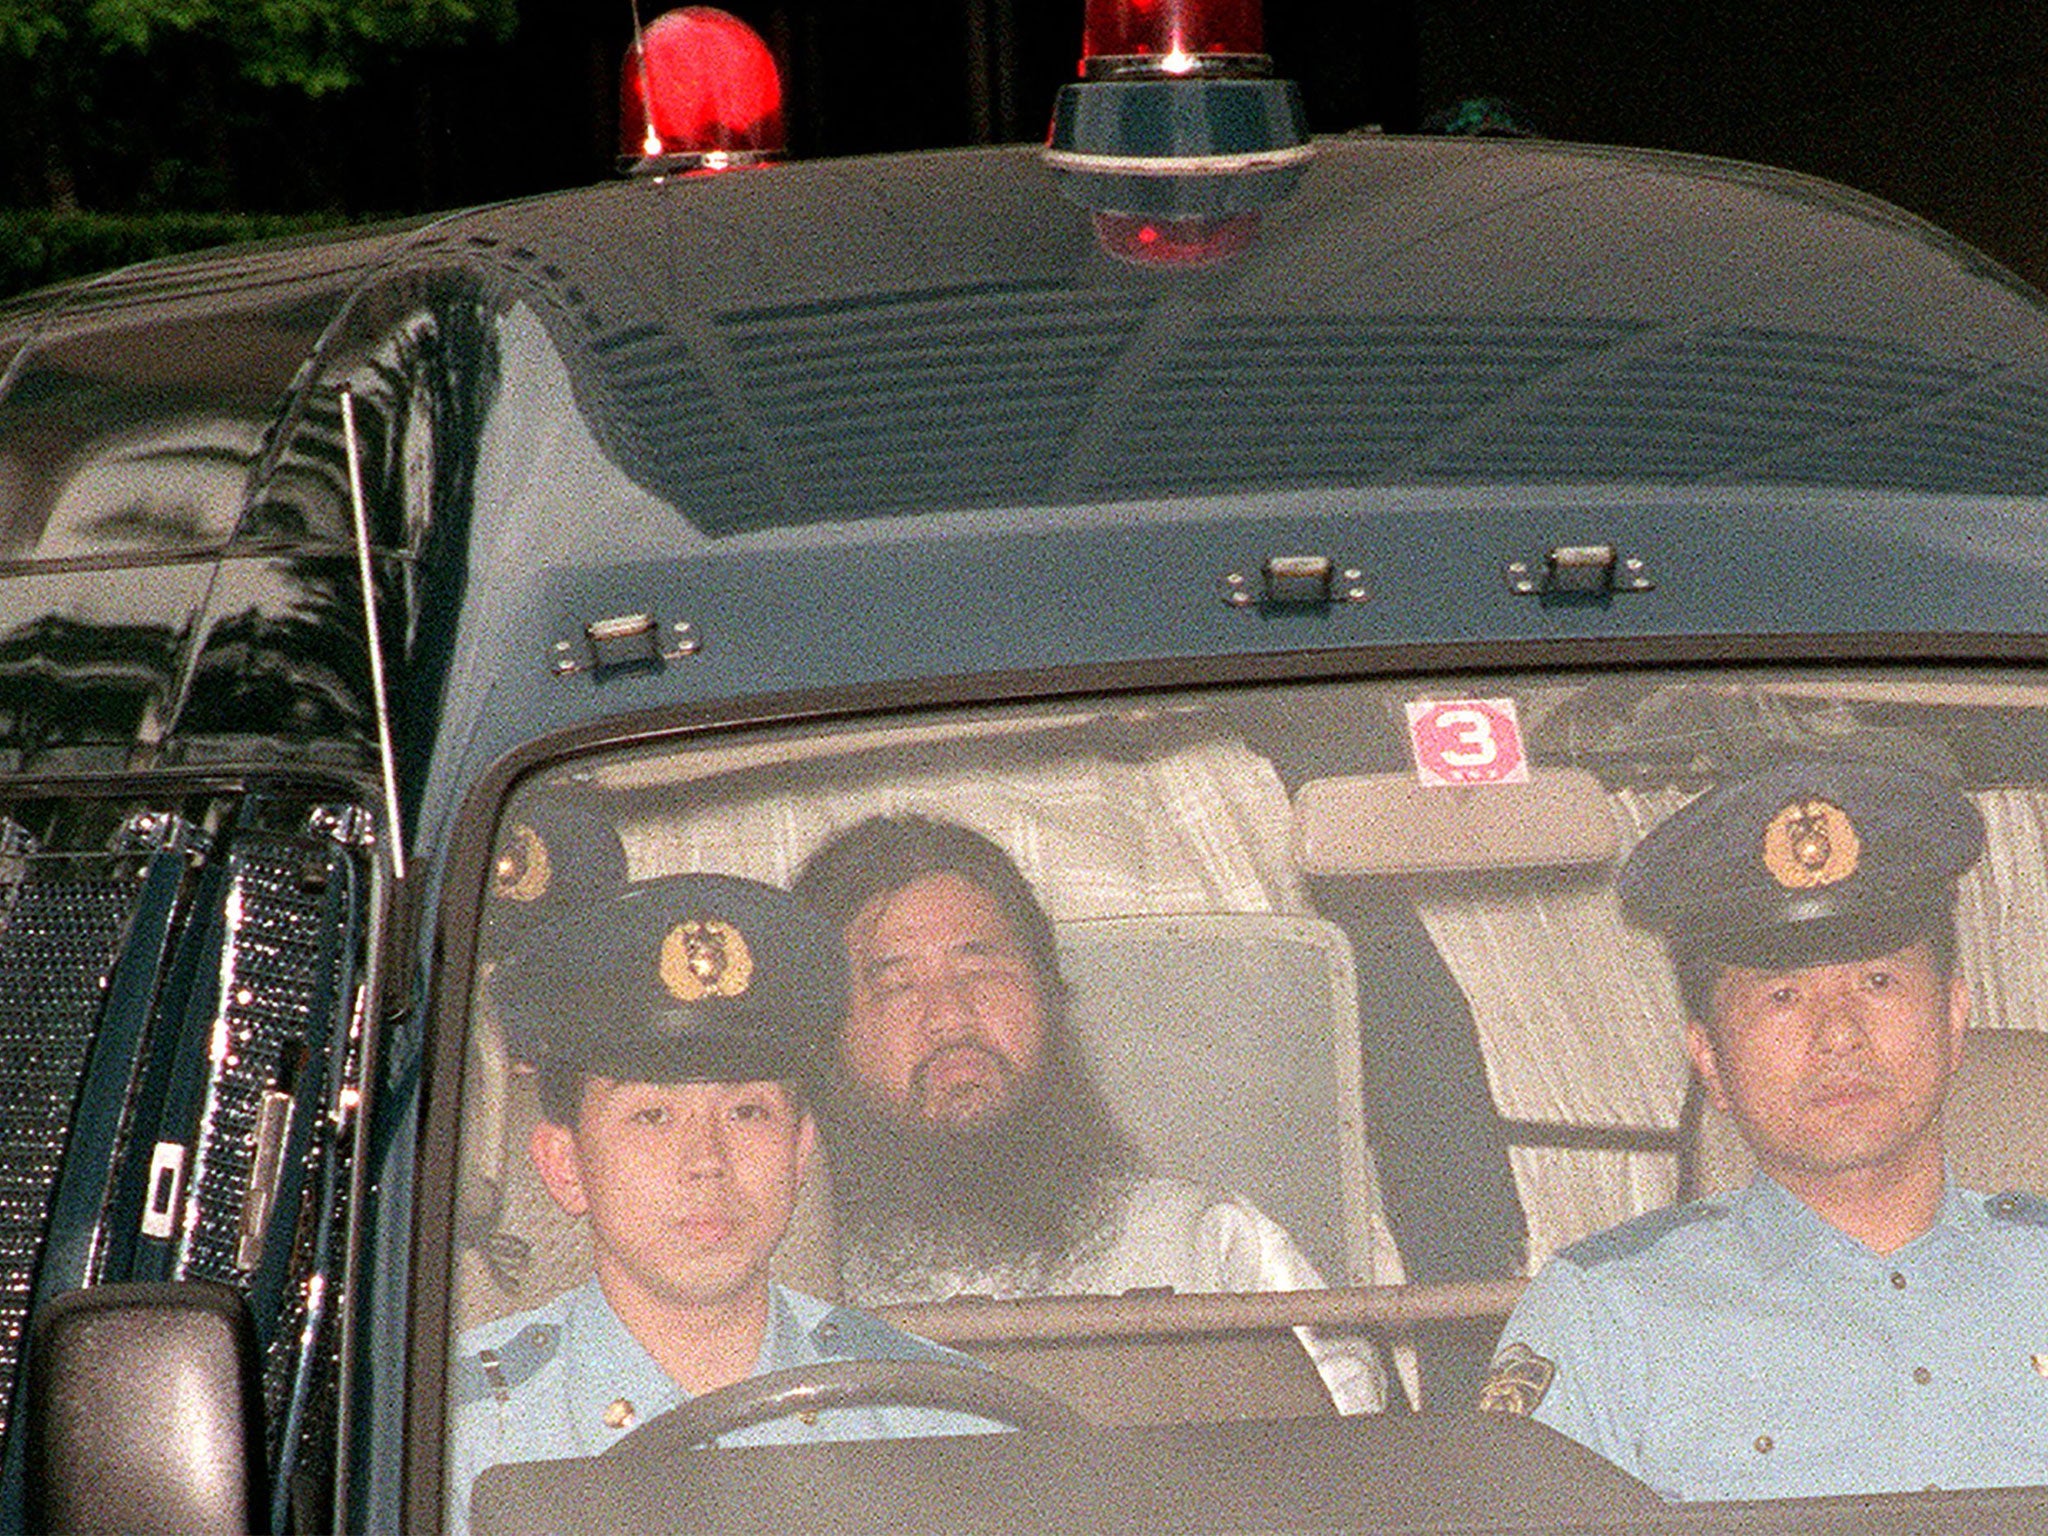 Shoko Asahara in police custody